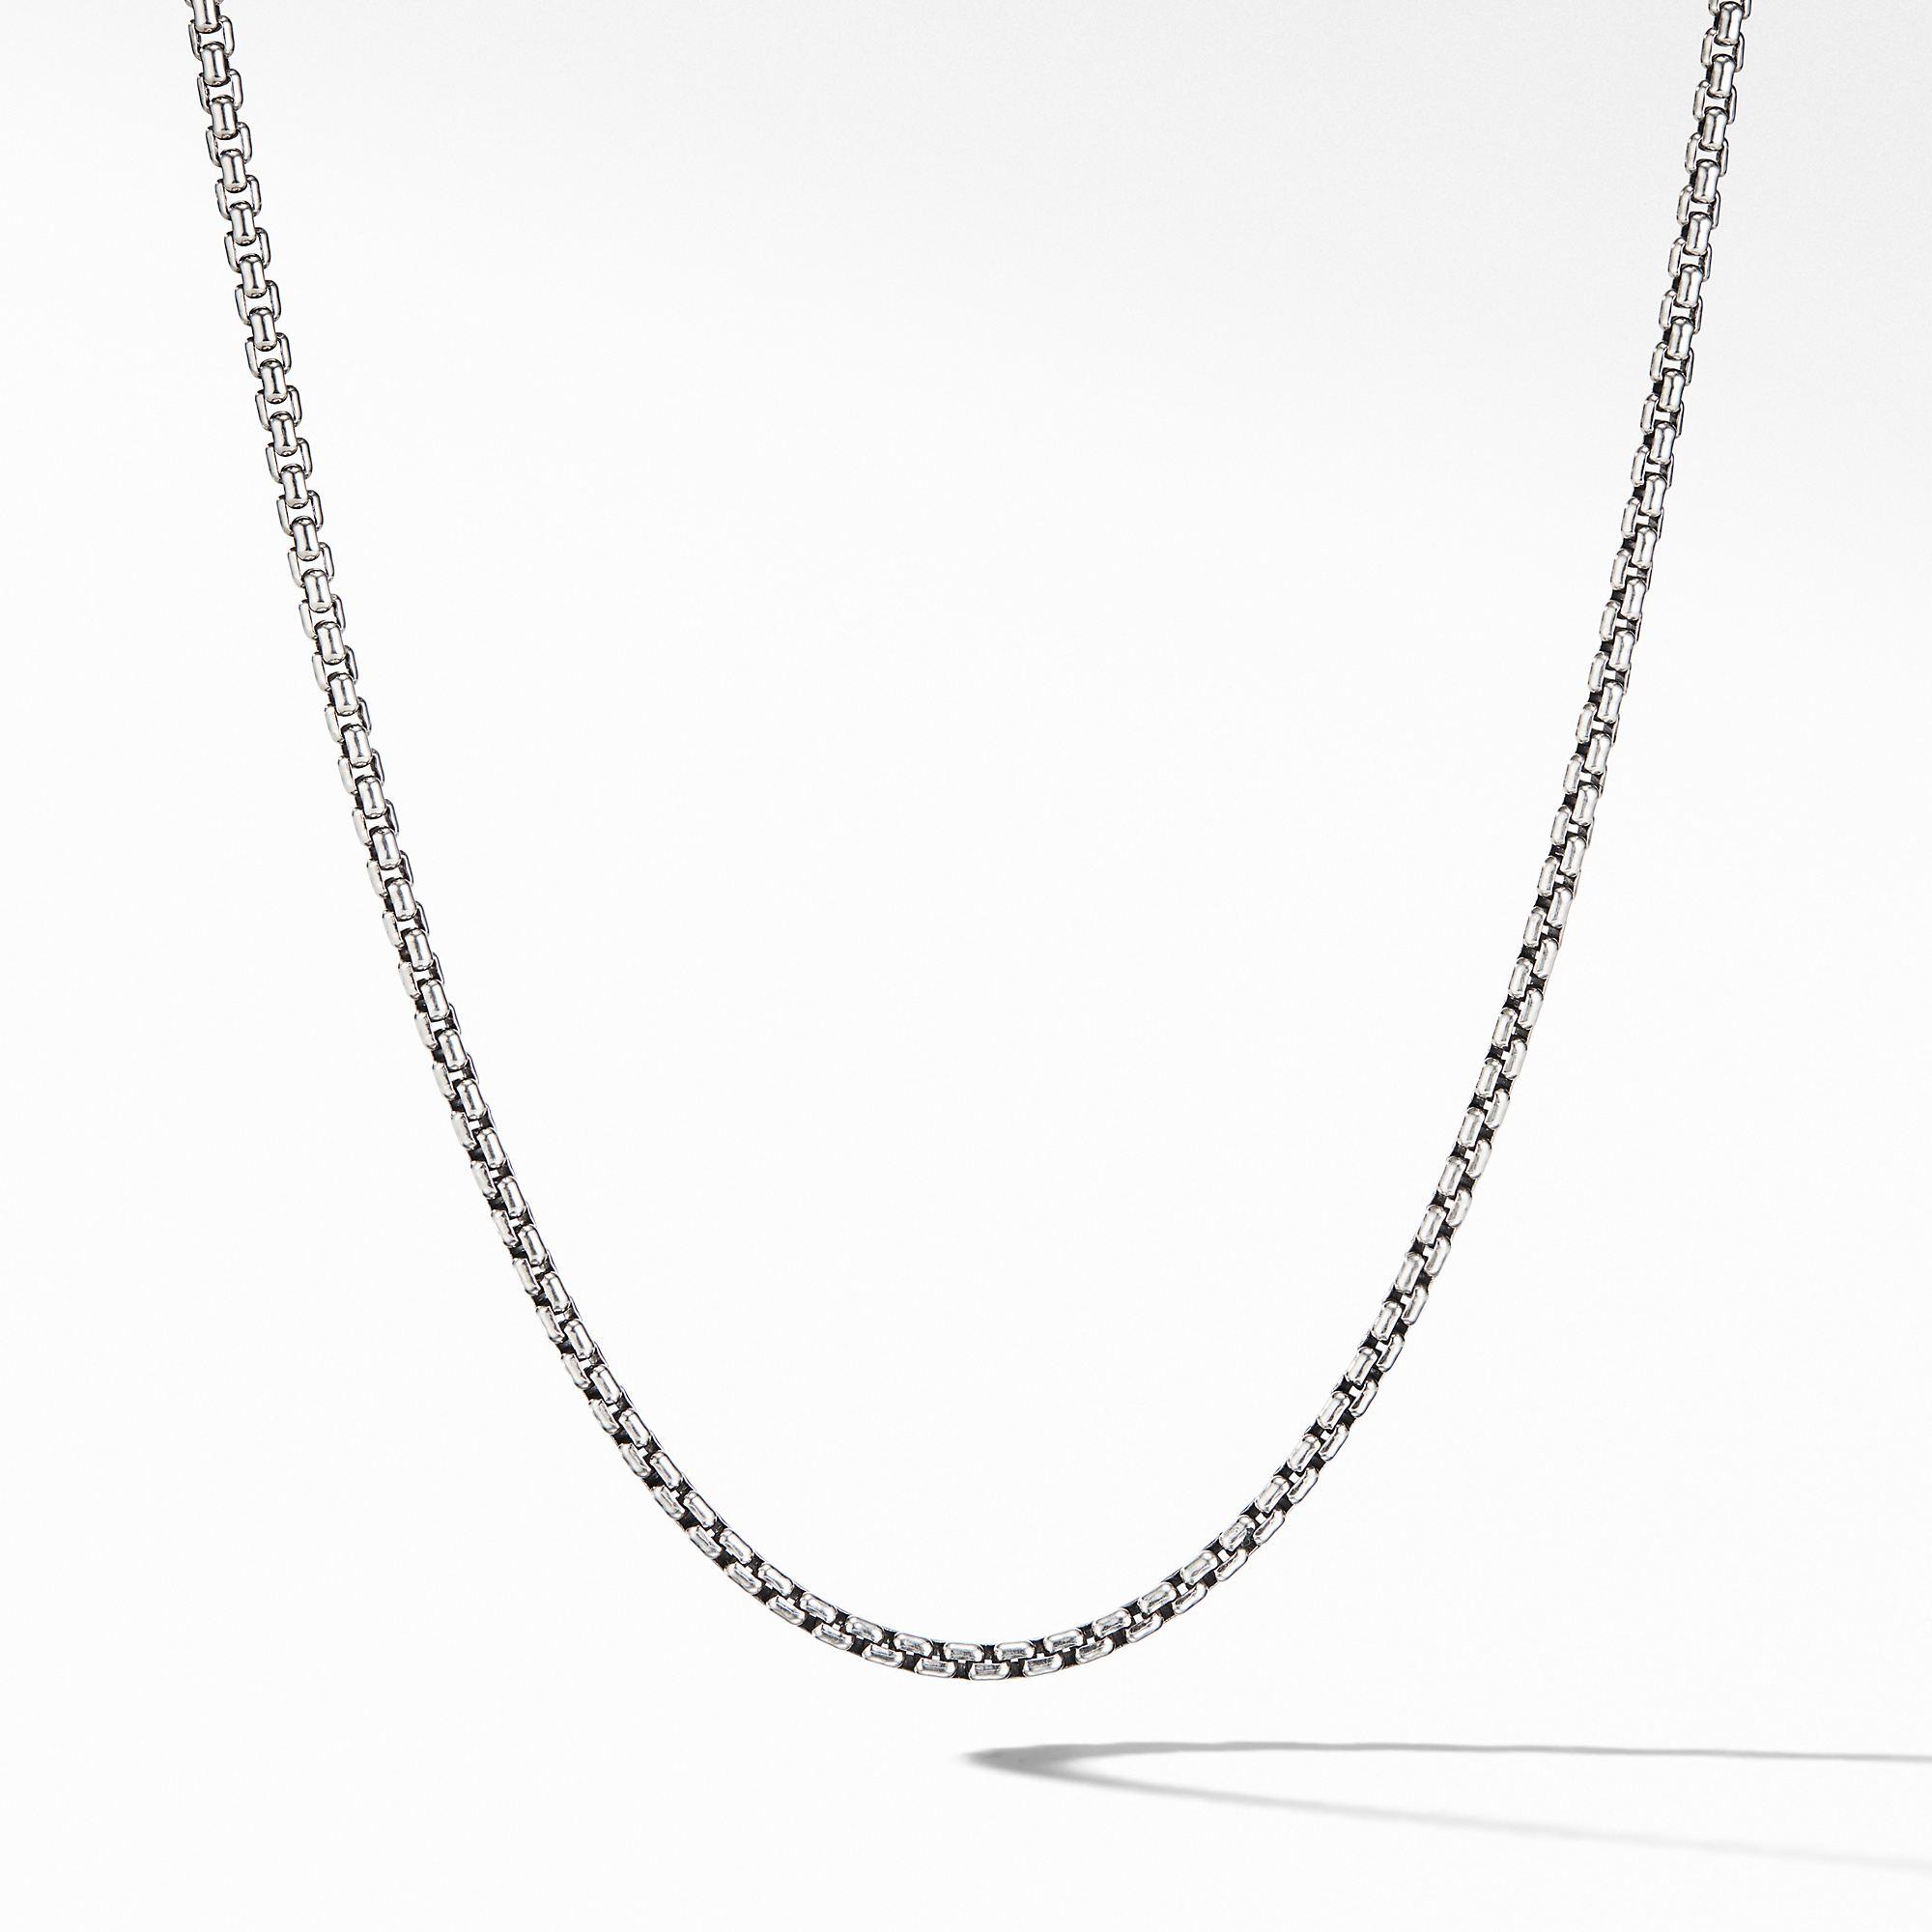 David Yurman Men's small Box Chain Necklace in Sterling Silver, 26 inches 0